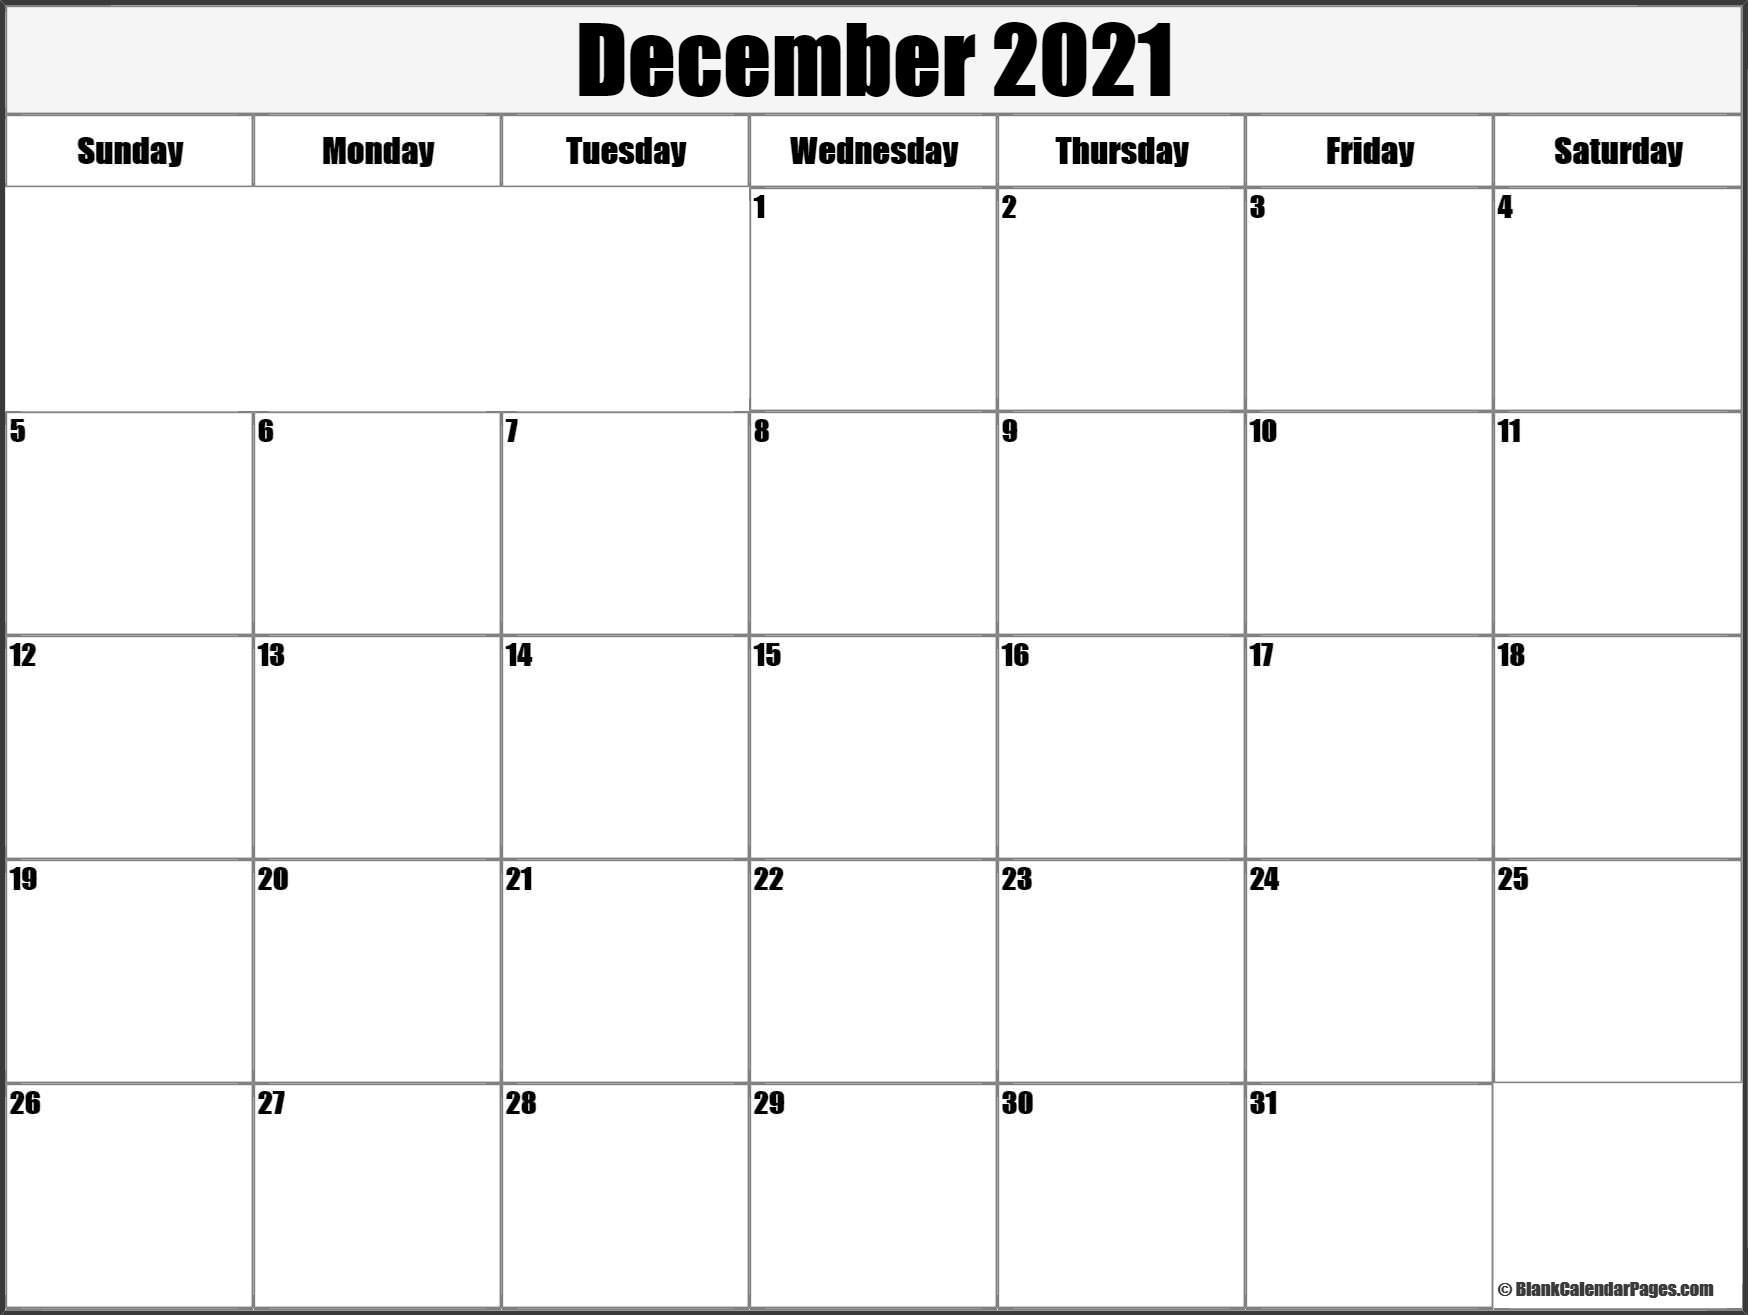 December 2021 Blank Calendar Templates.